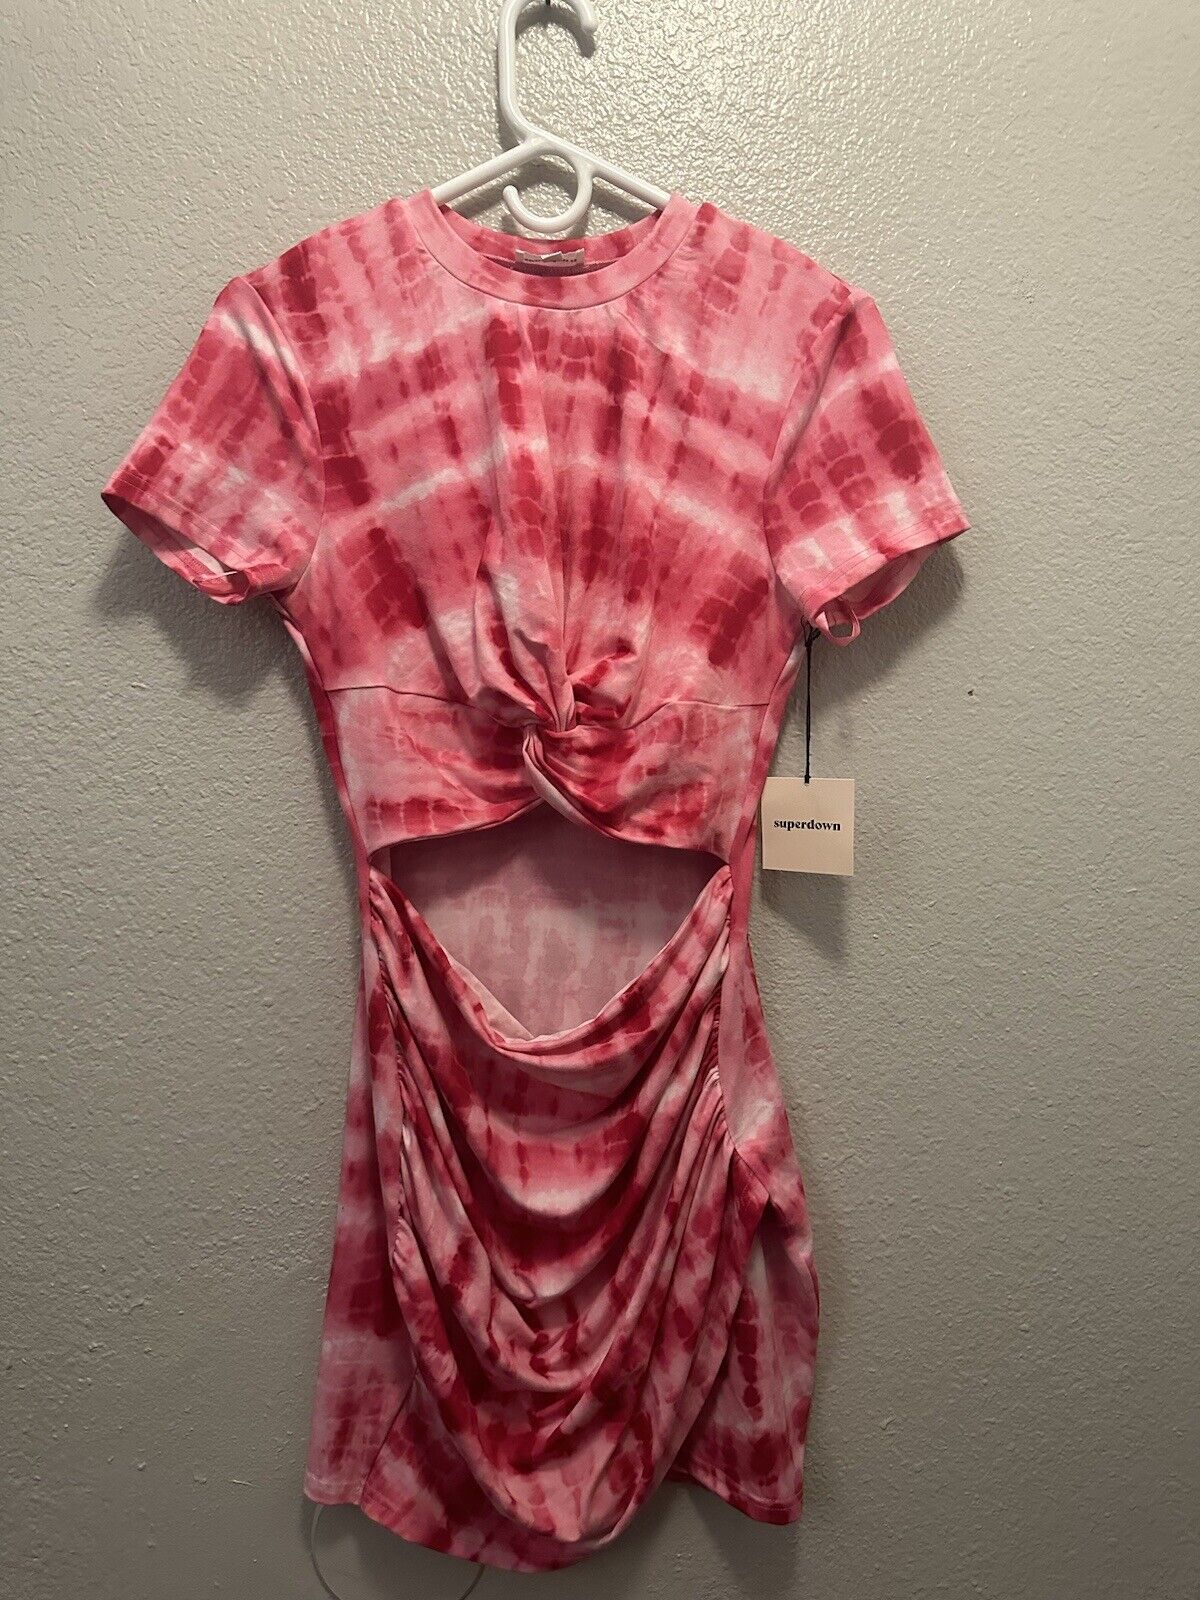 Superdown Revolve Maureen Jersey Cut Out T-Shirt Mini Dress Pink Tye Dye Medium  | eBay | eBay US